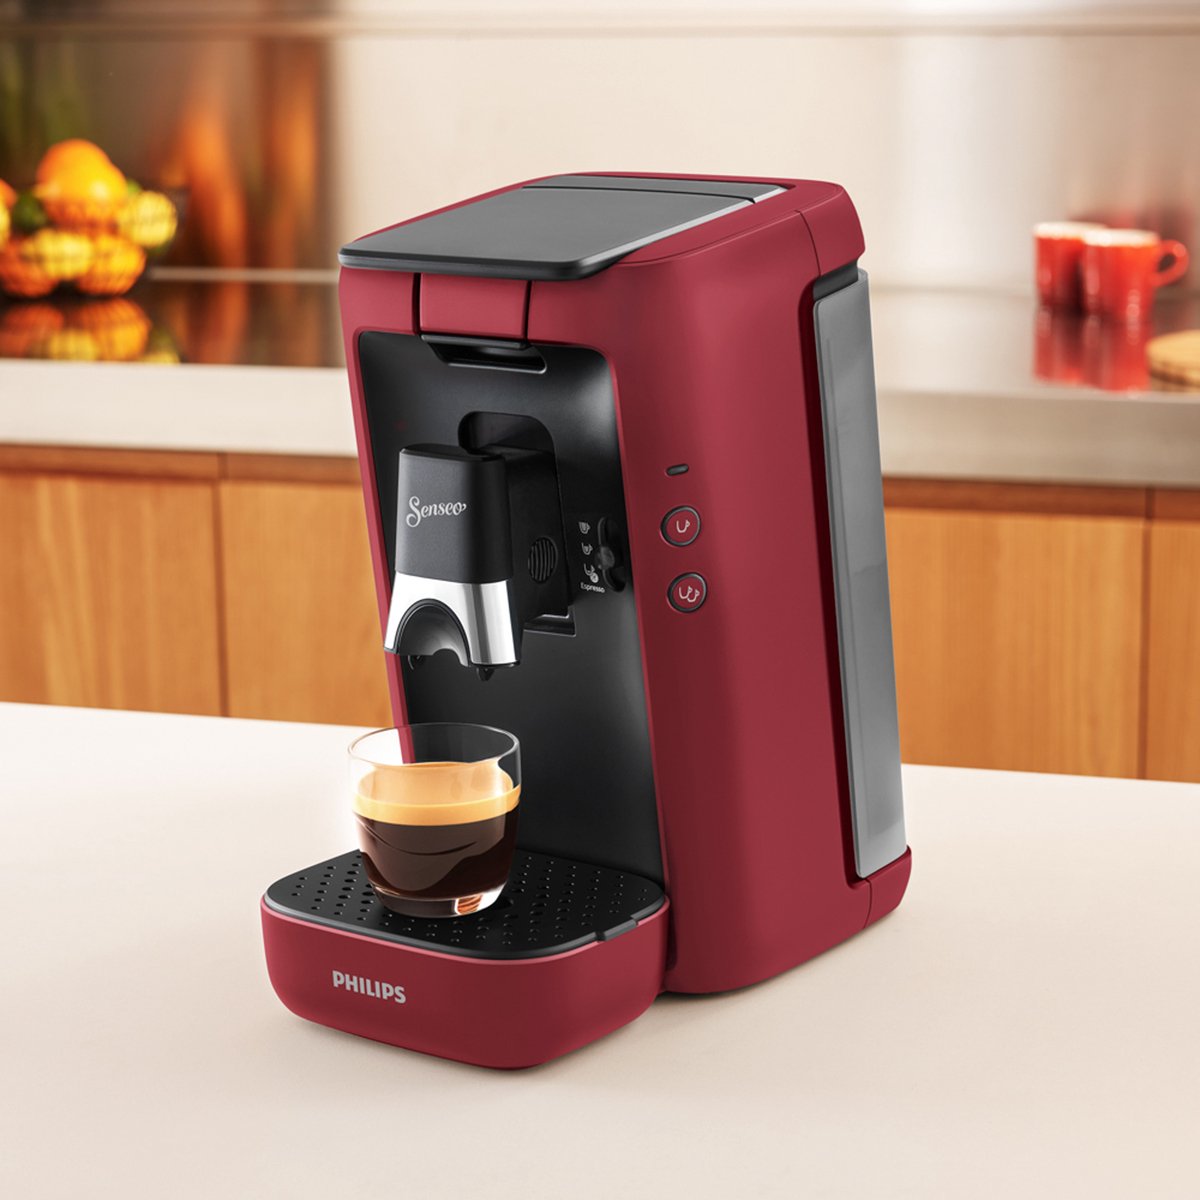 Philips Senseo Maestro - CSA260/90 - Machine à café à dosettes - Rouge